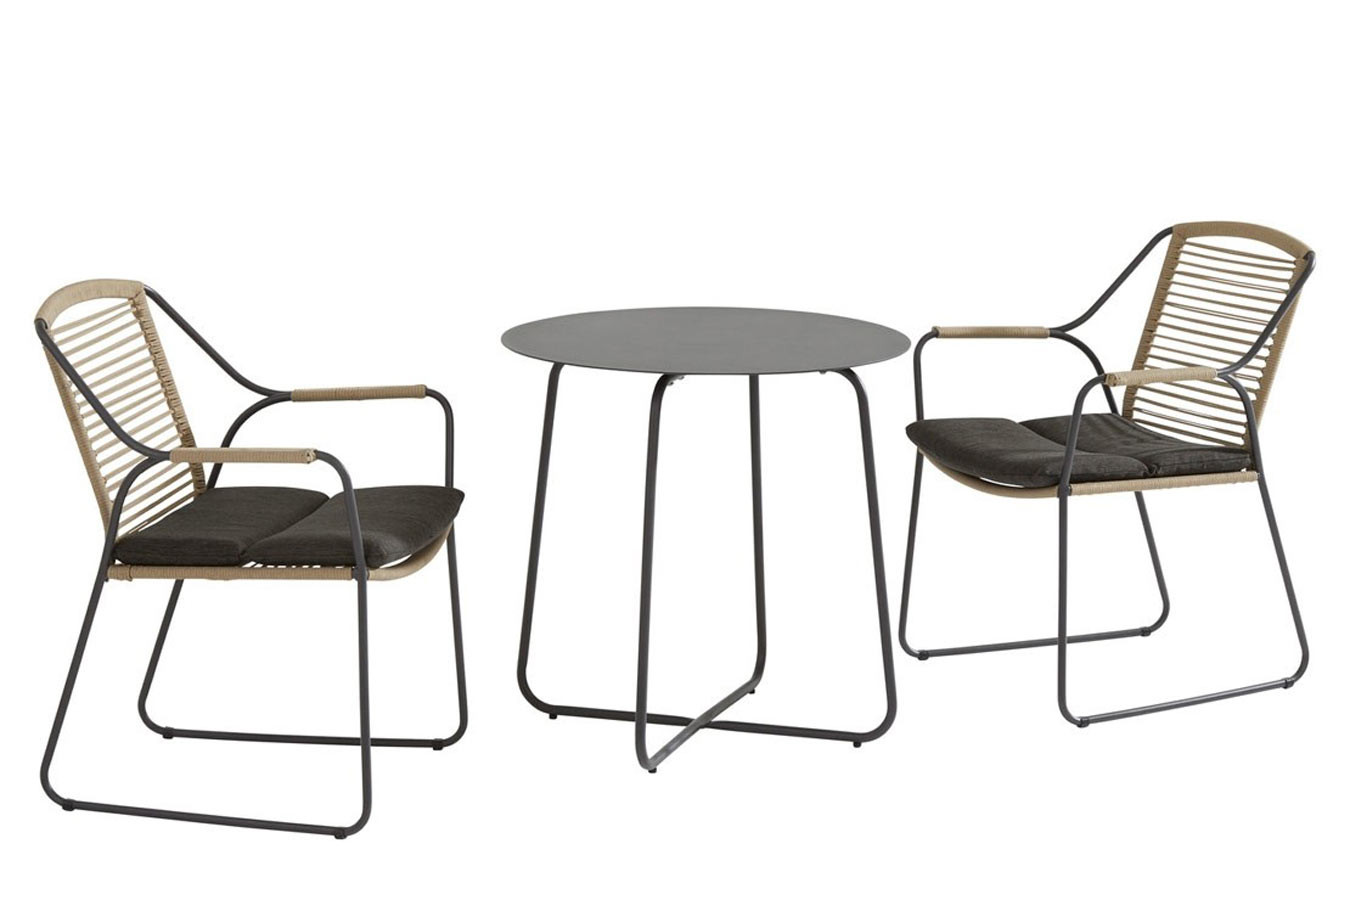 etiquette Interpretatie faillissement Dali anthracite bijzet tafel met 2 Scandic dining stoelen